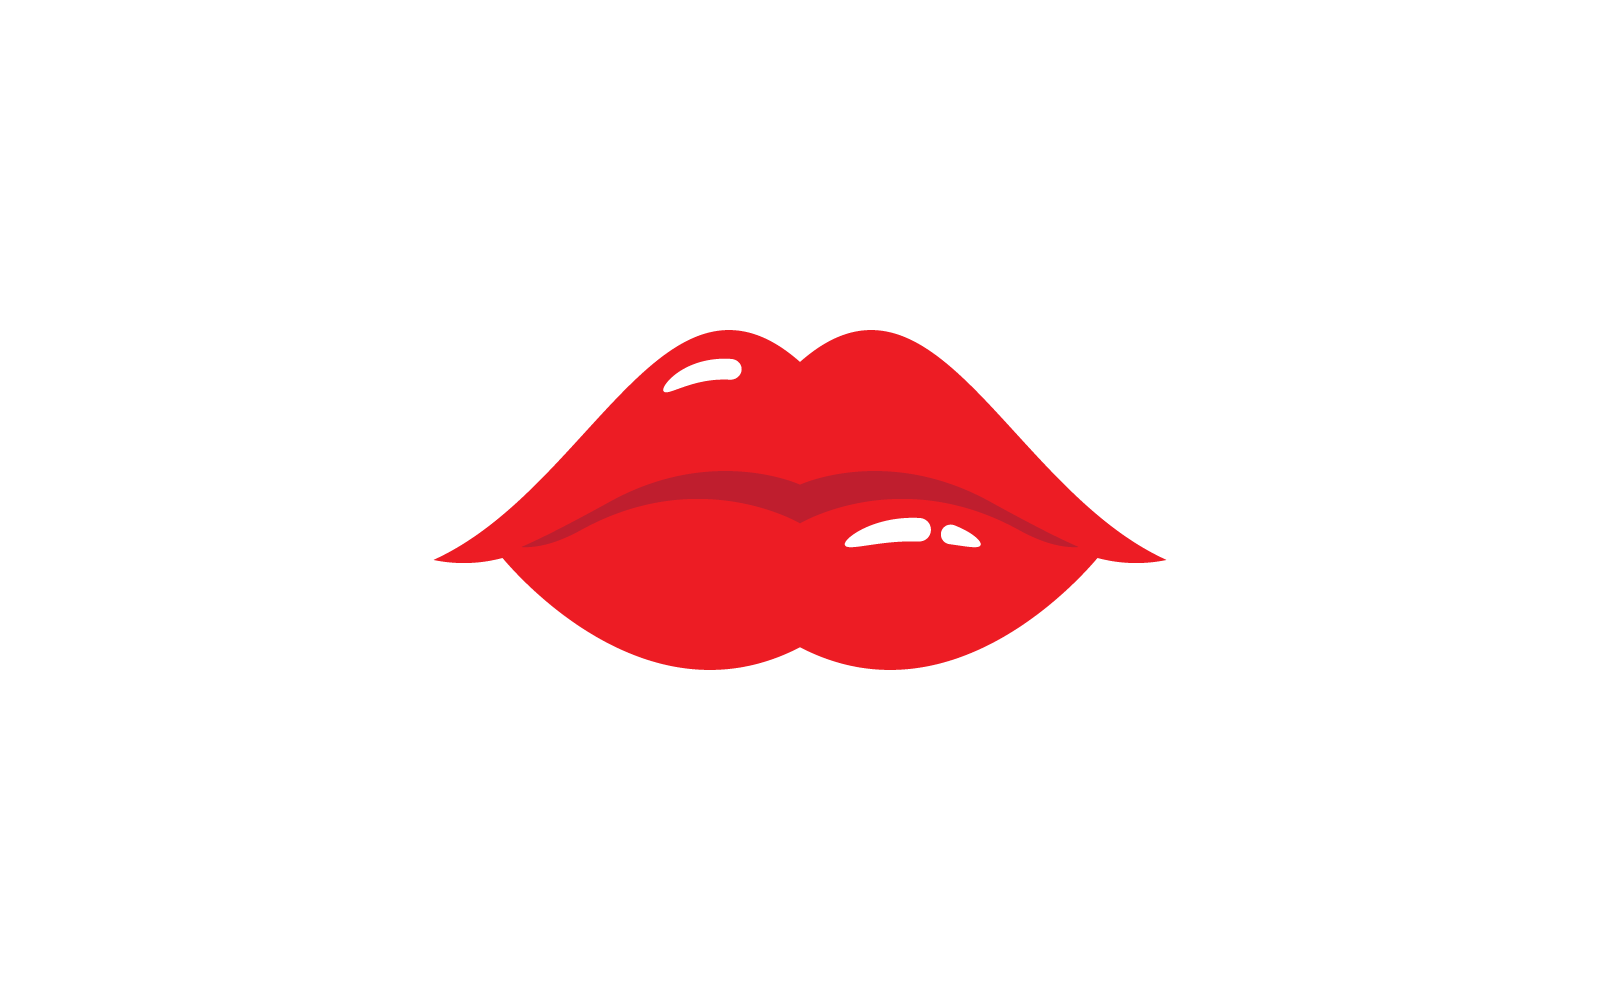 Beauty lips women design illustration template